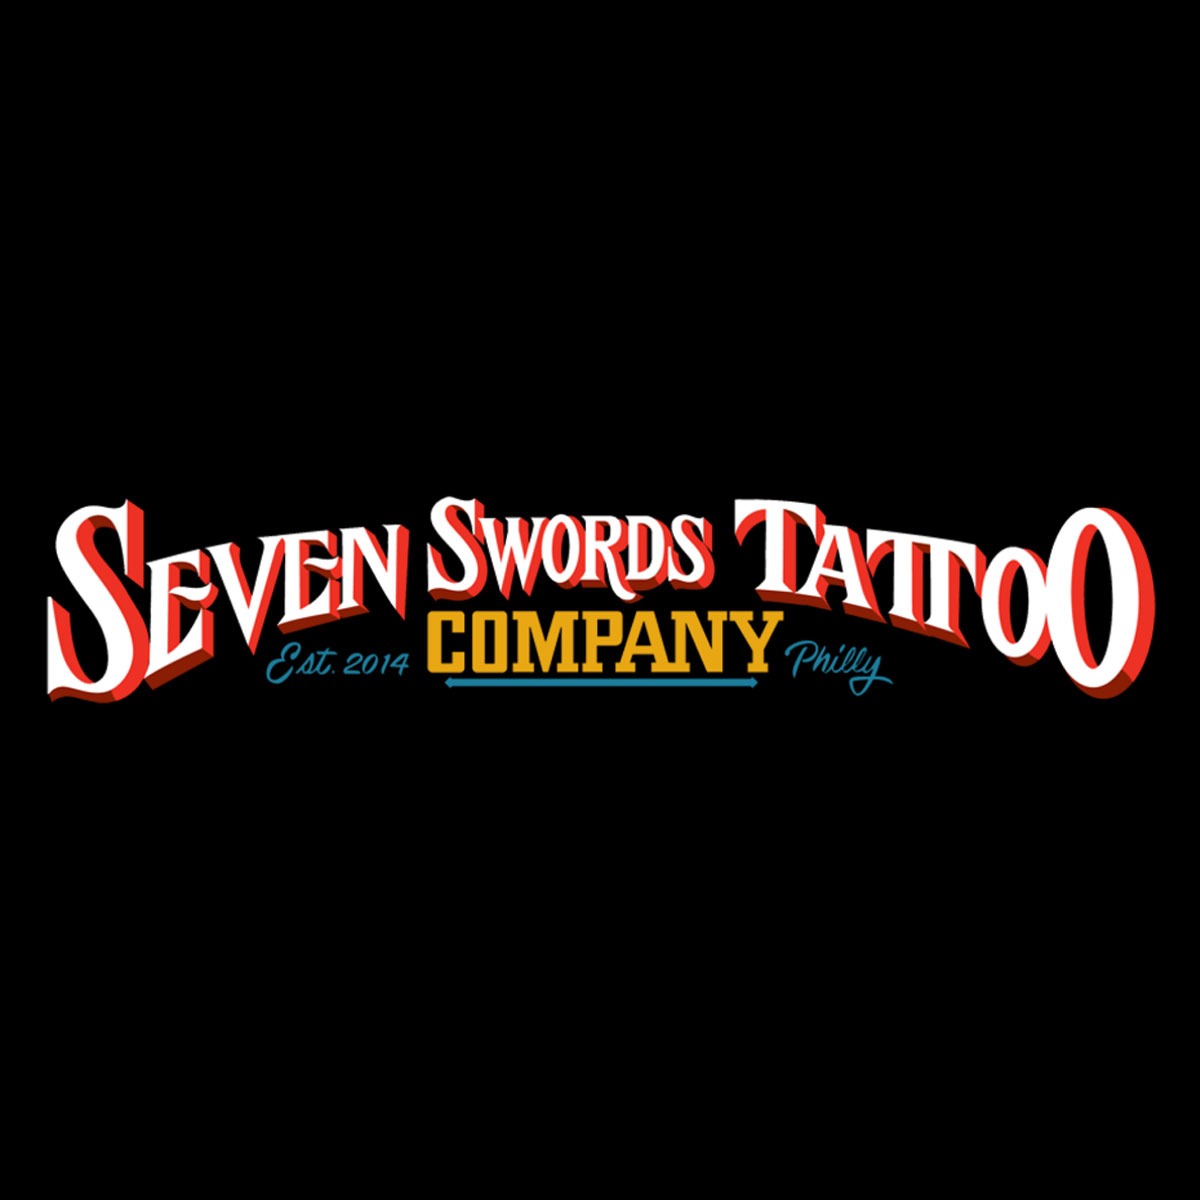 Seven Swords Tattoo Company